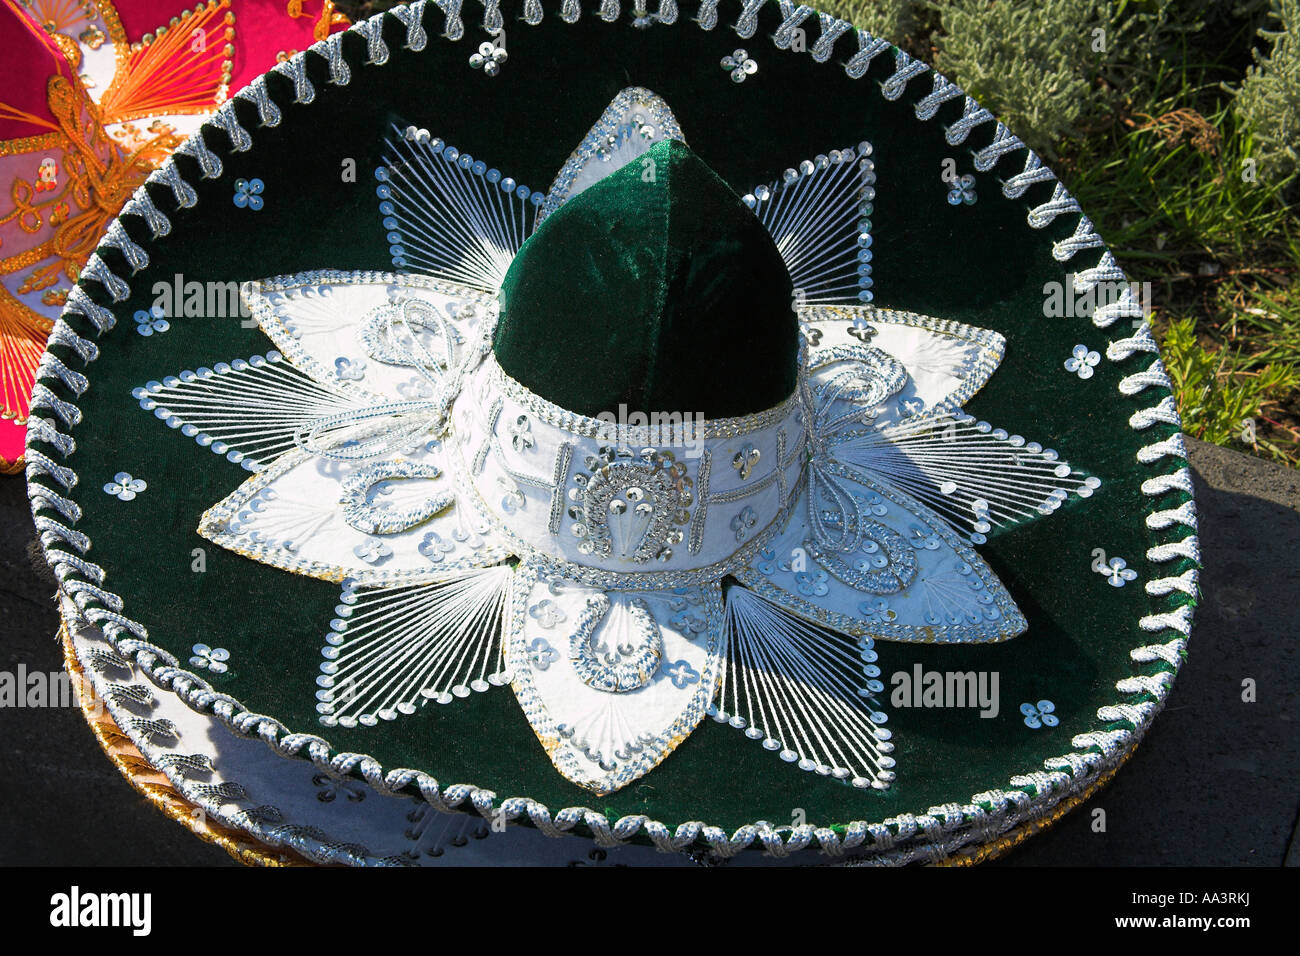 Sombrero-Hut für Verkauf, Mexico City, Mexiko Stockfotografie - Alamy